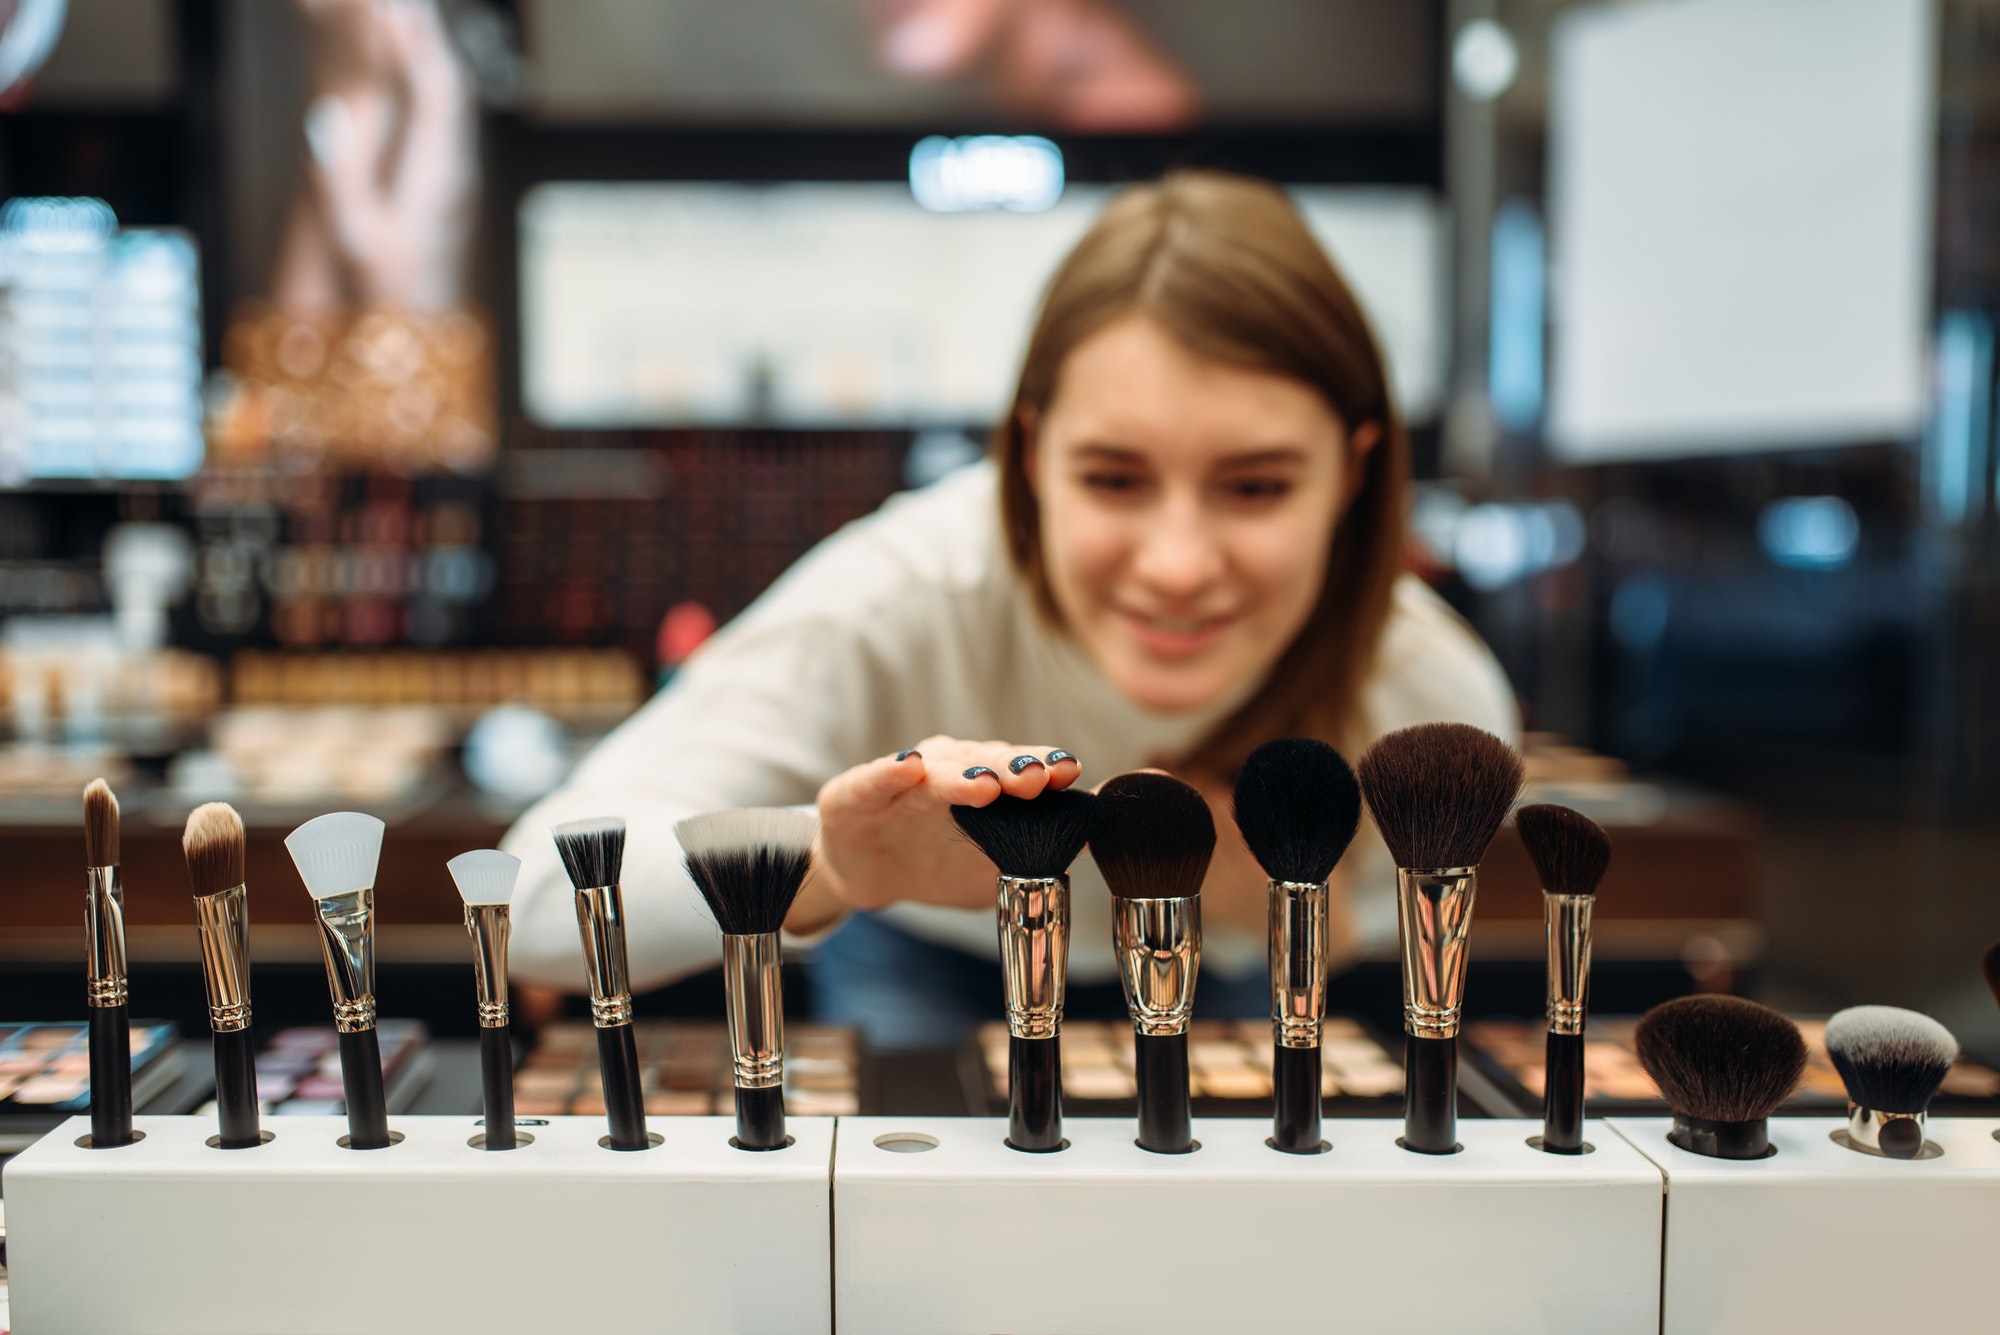 Female customer choosing brushes in makeup shop